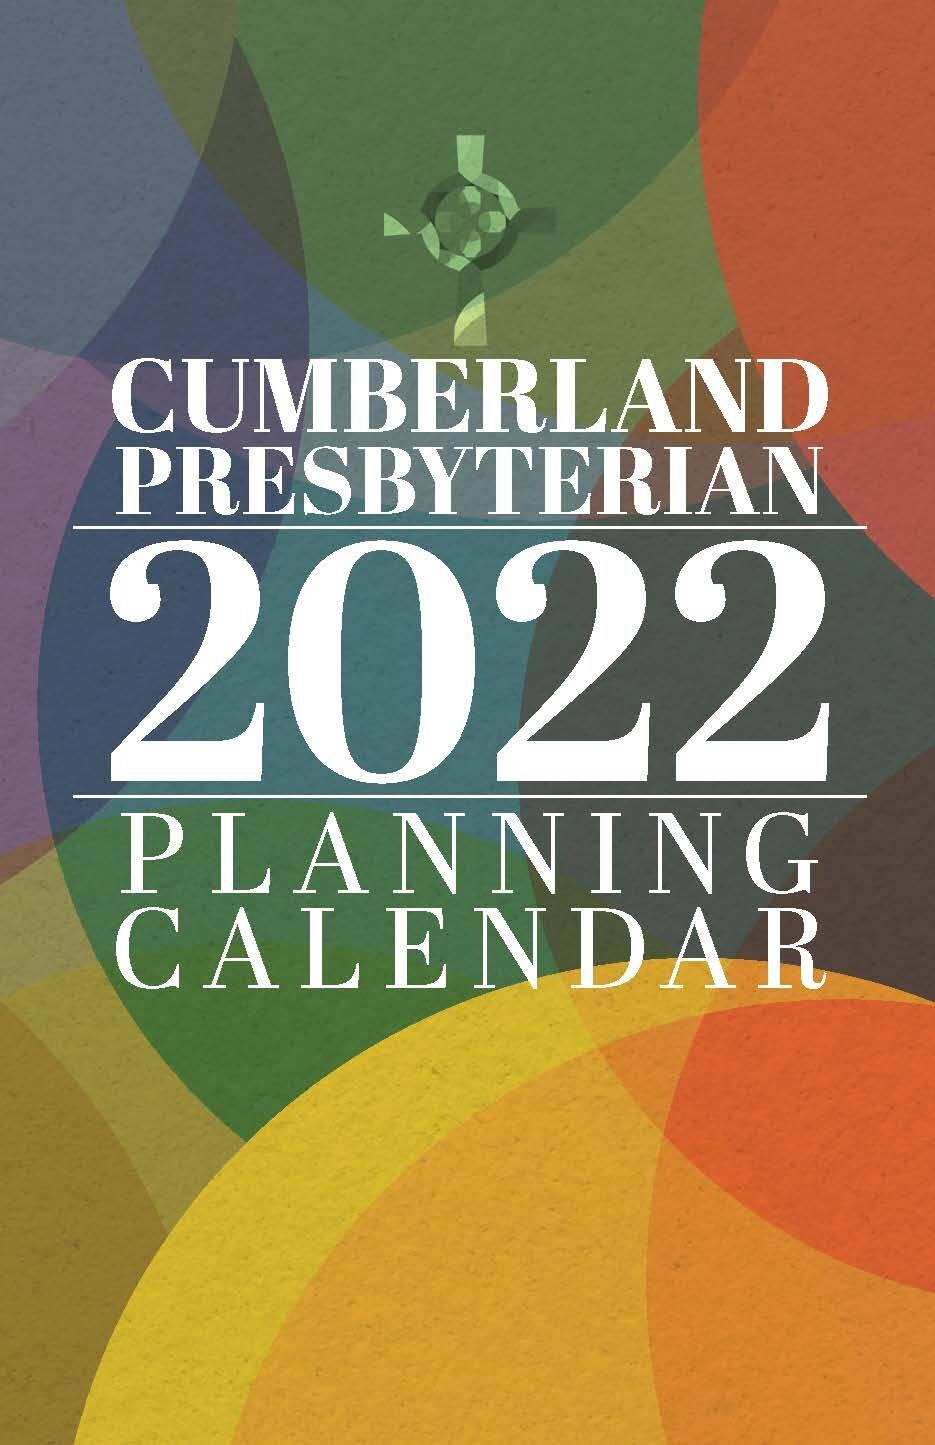 Presbyterian Calendar 2022 2022 Program Planning Calendar